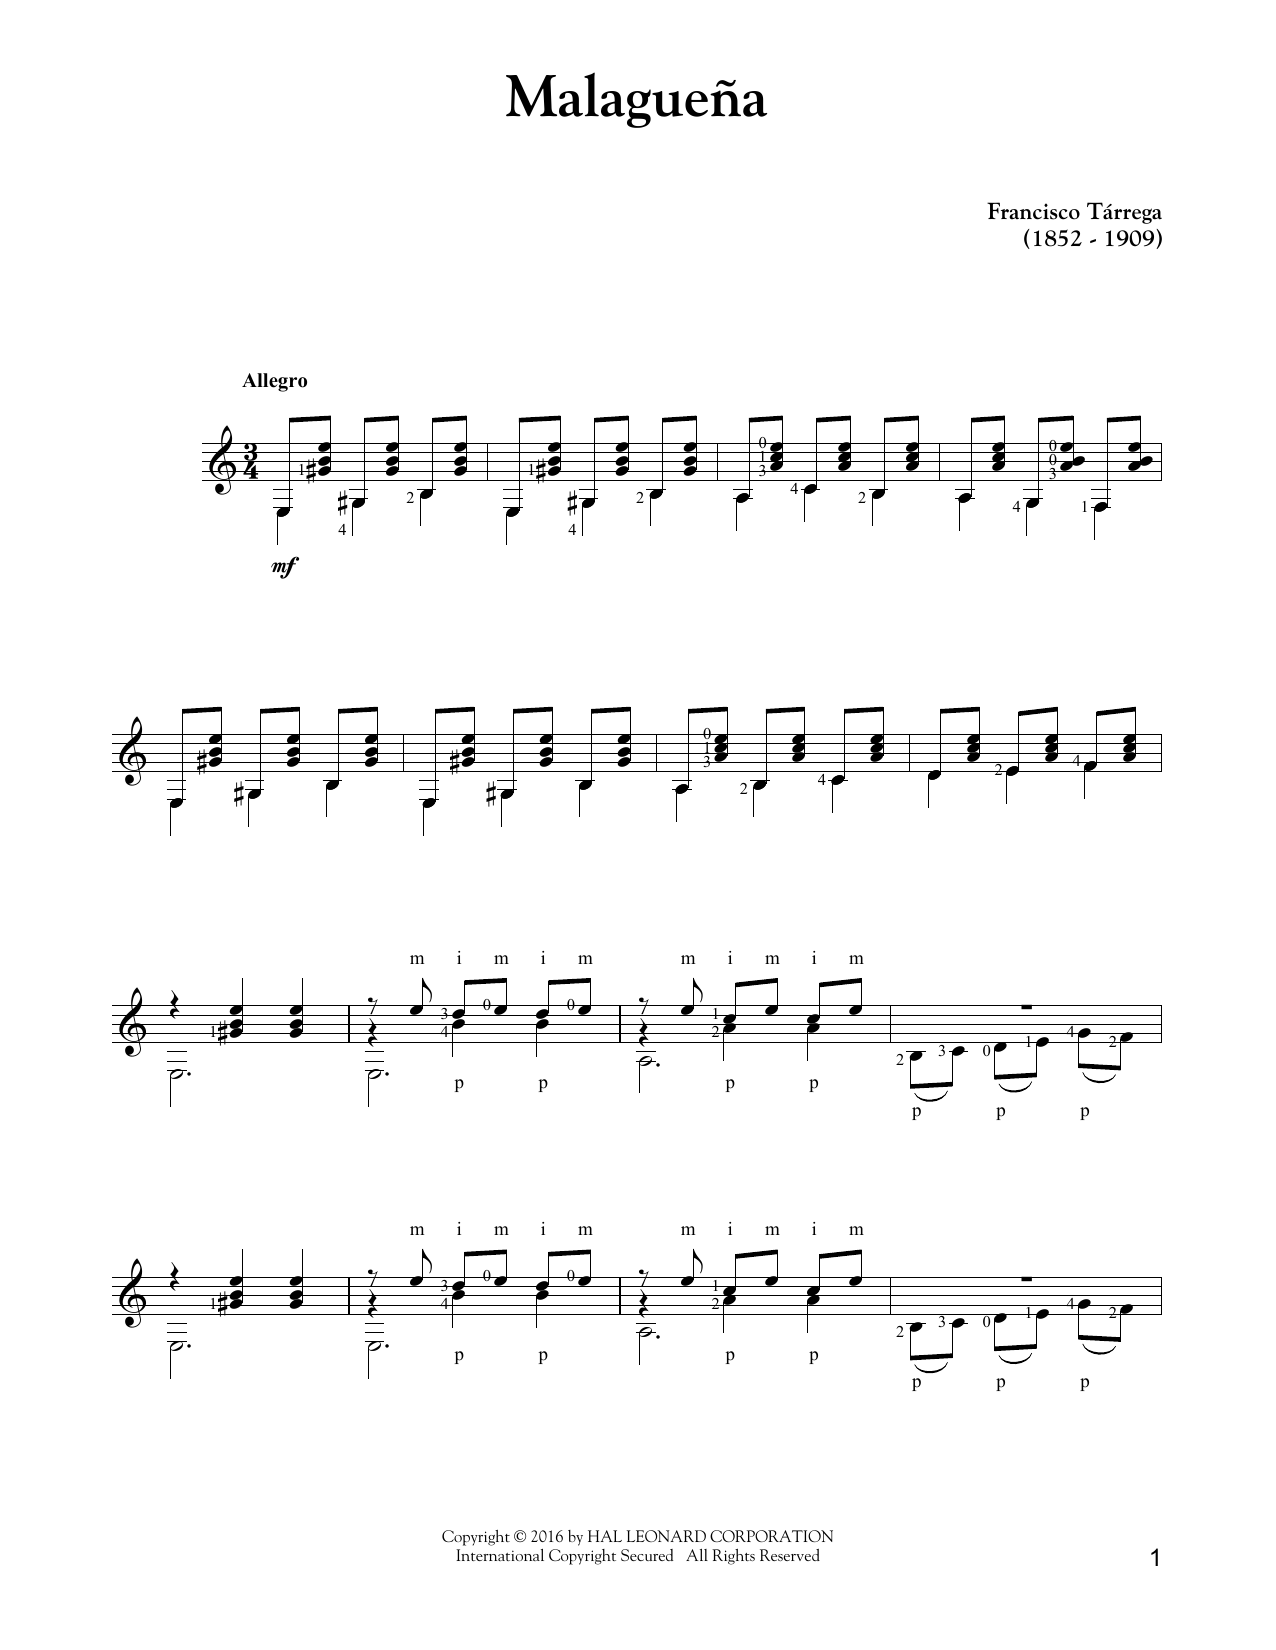 Download Francisco Tarrega Malaguena Sheet Music and learn how to play Guitar Tab PDF digital score in minutes